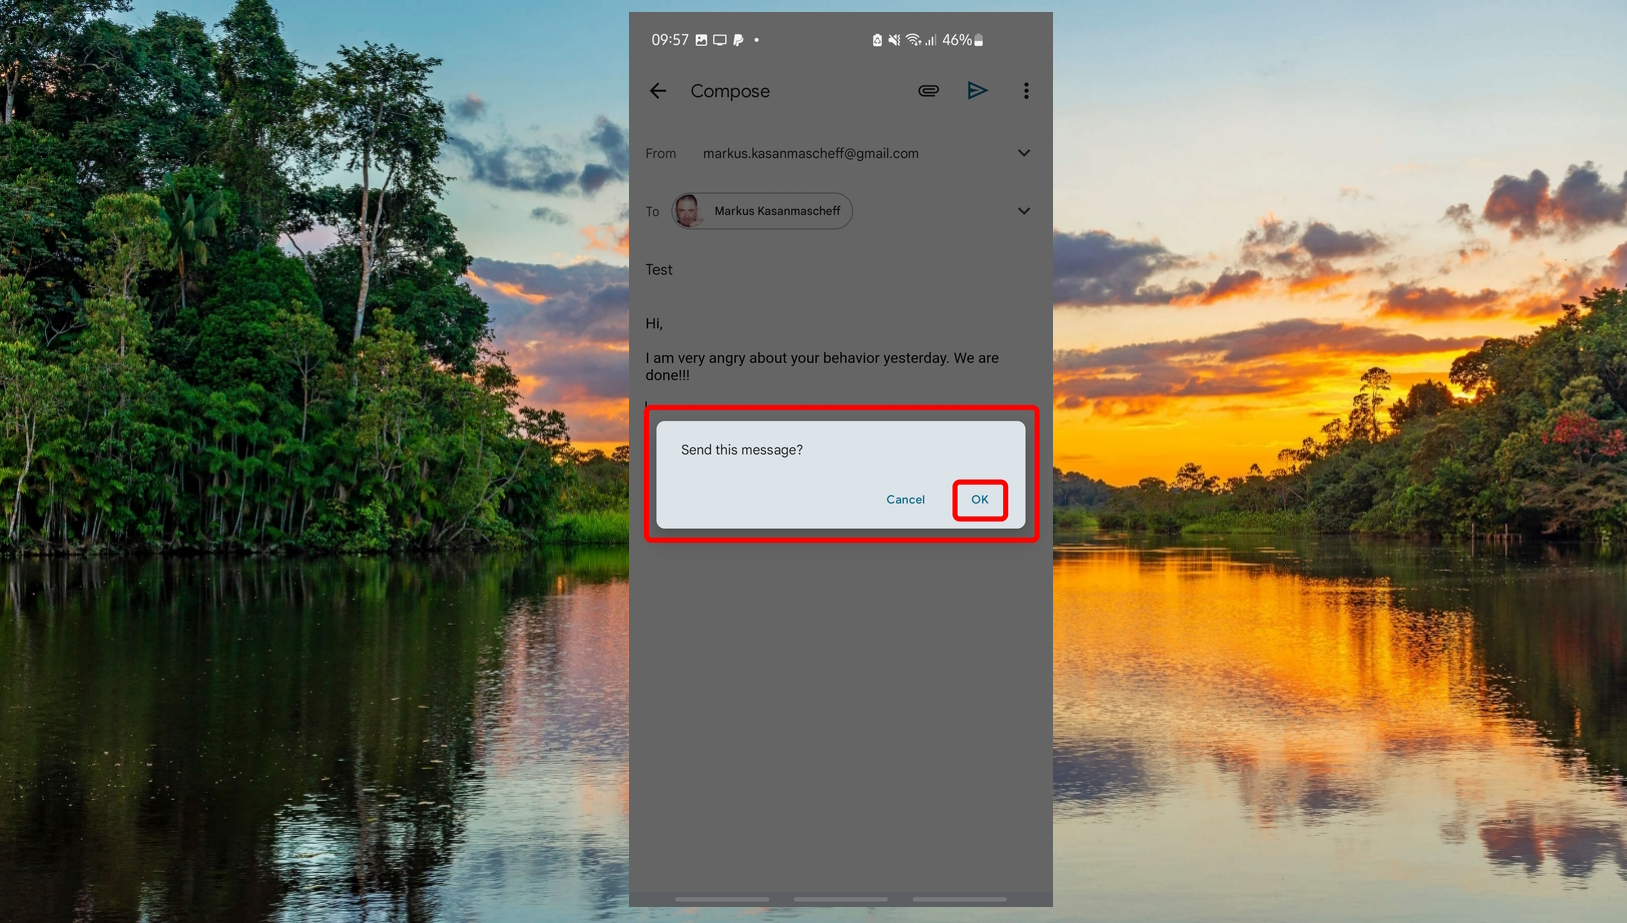 Gmail app - Compose - Send - Confirm to send message